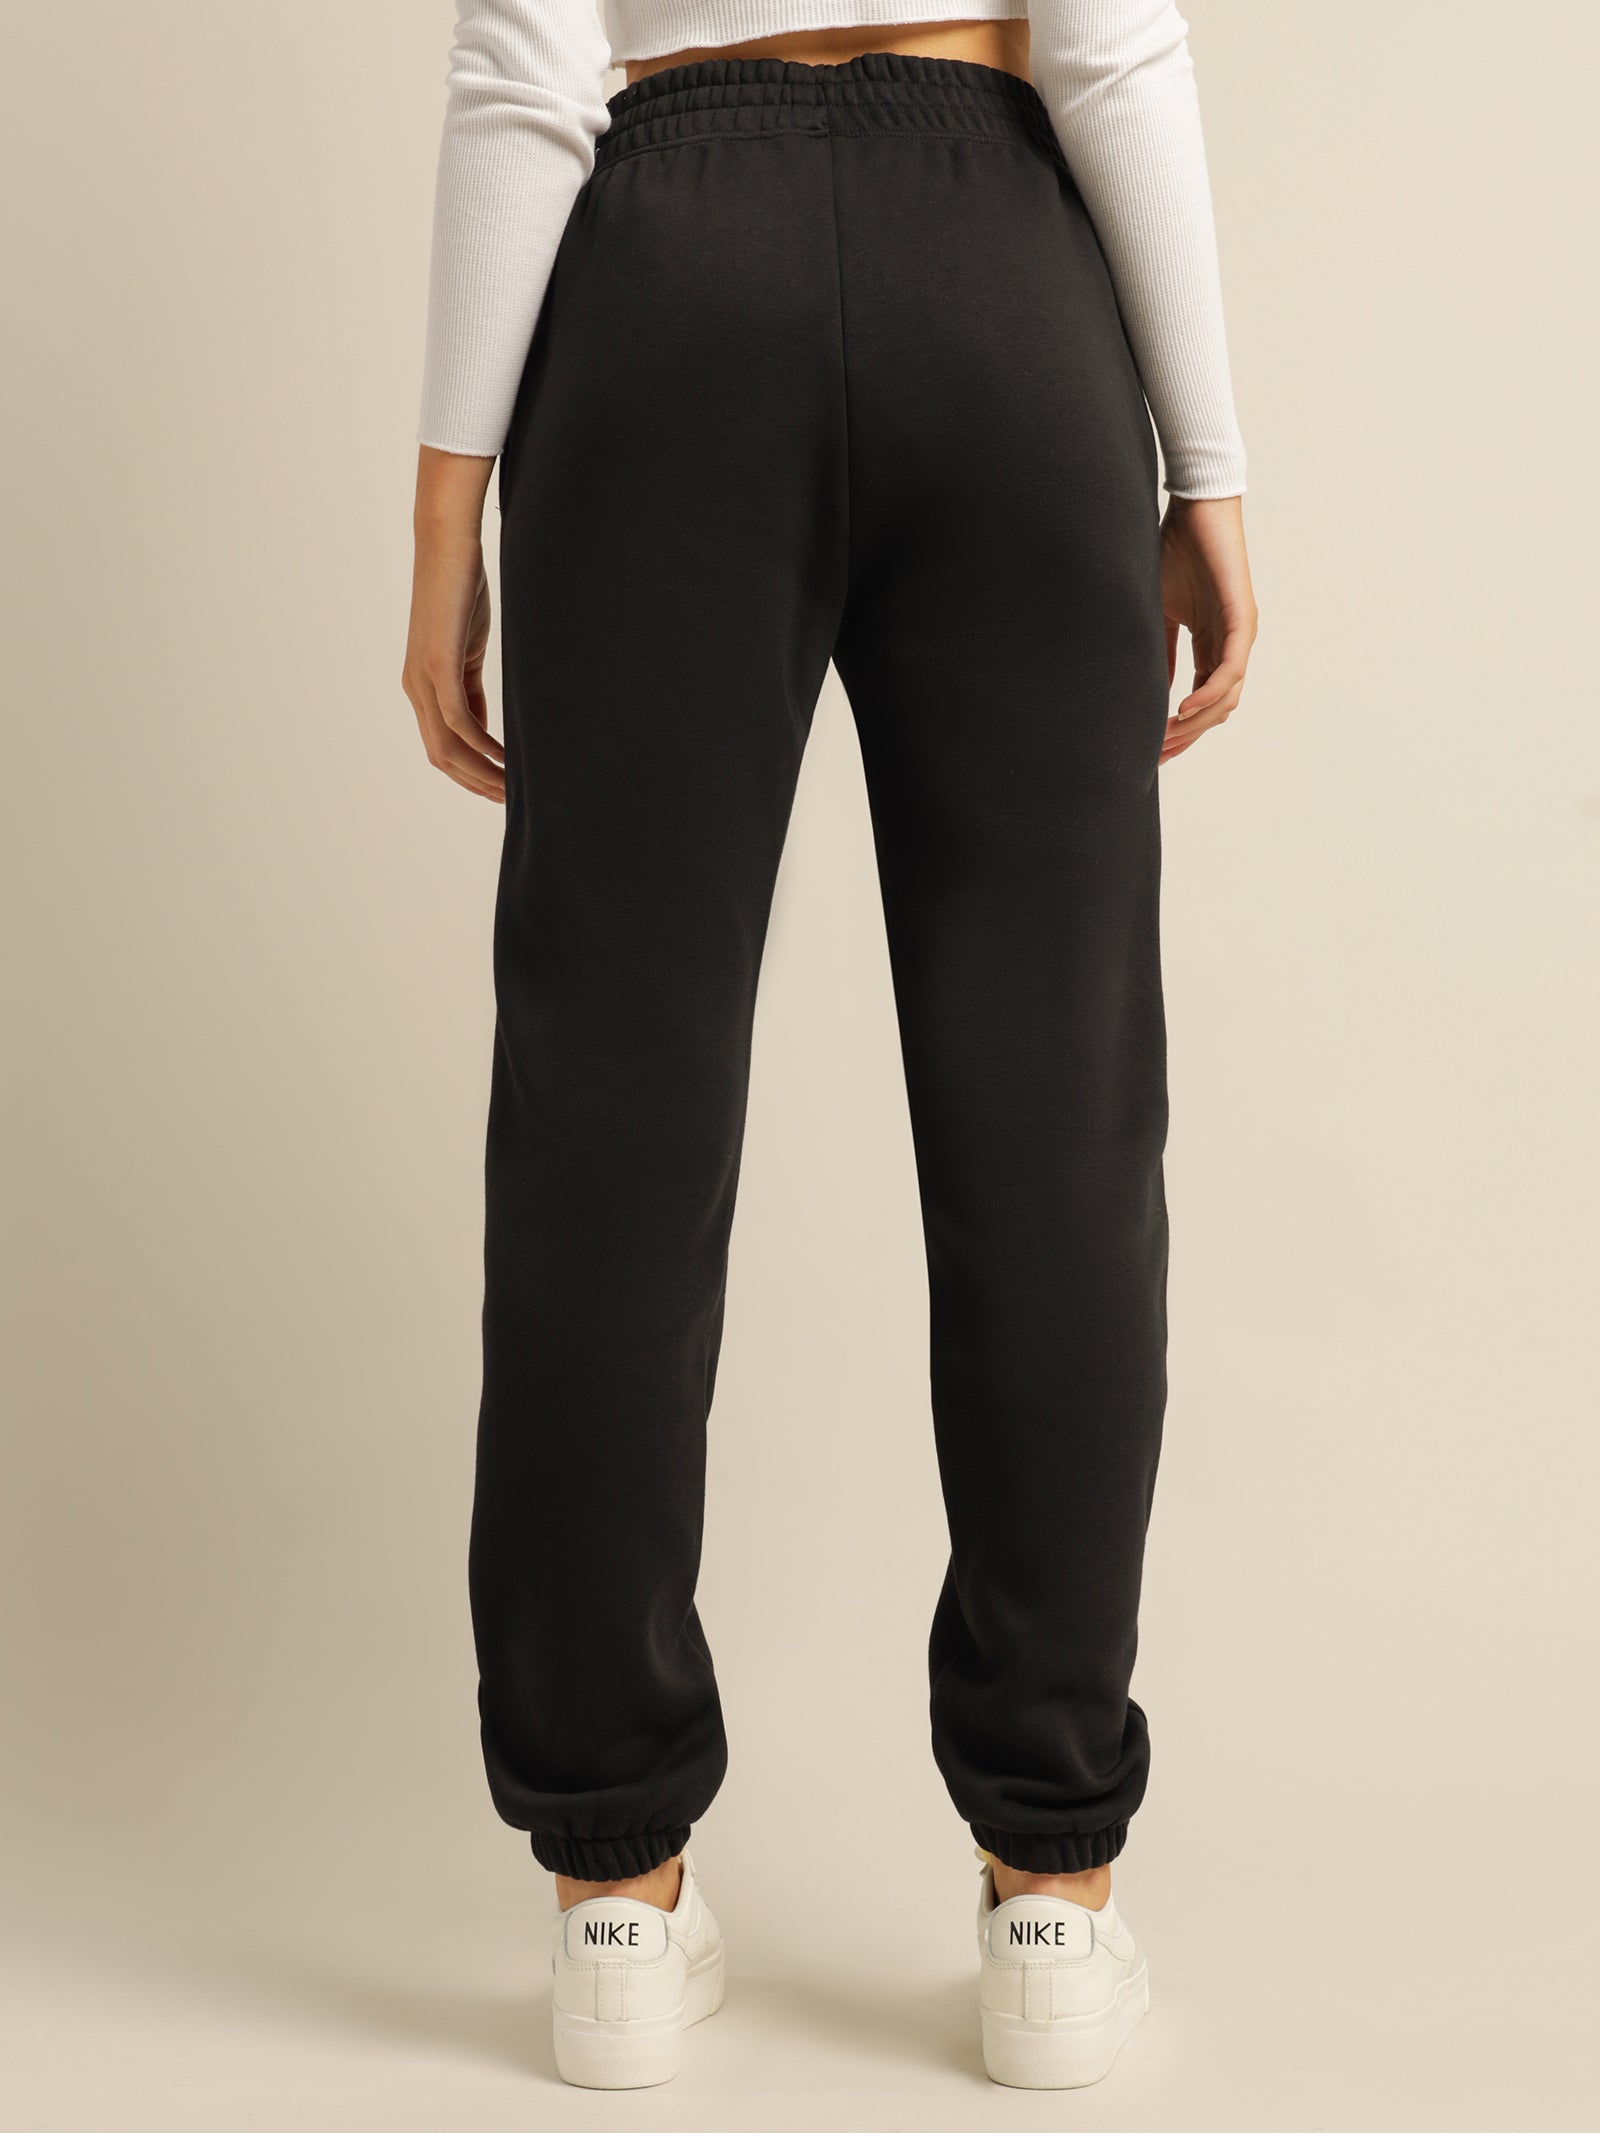 Sportswear Essential Collection Fleece Pants in Black - Glue Store